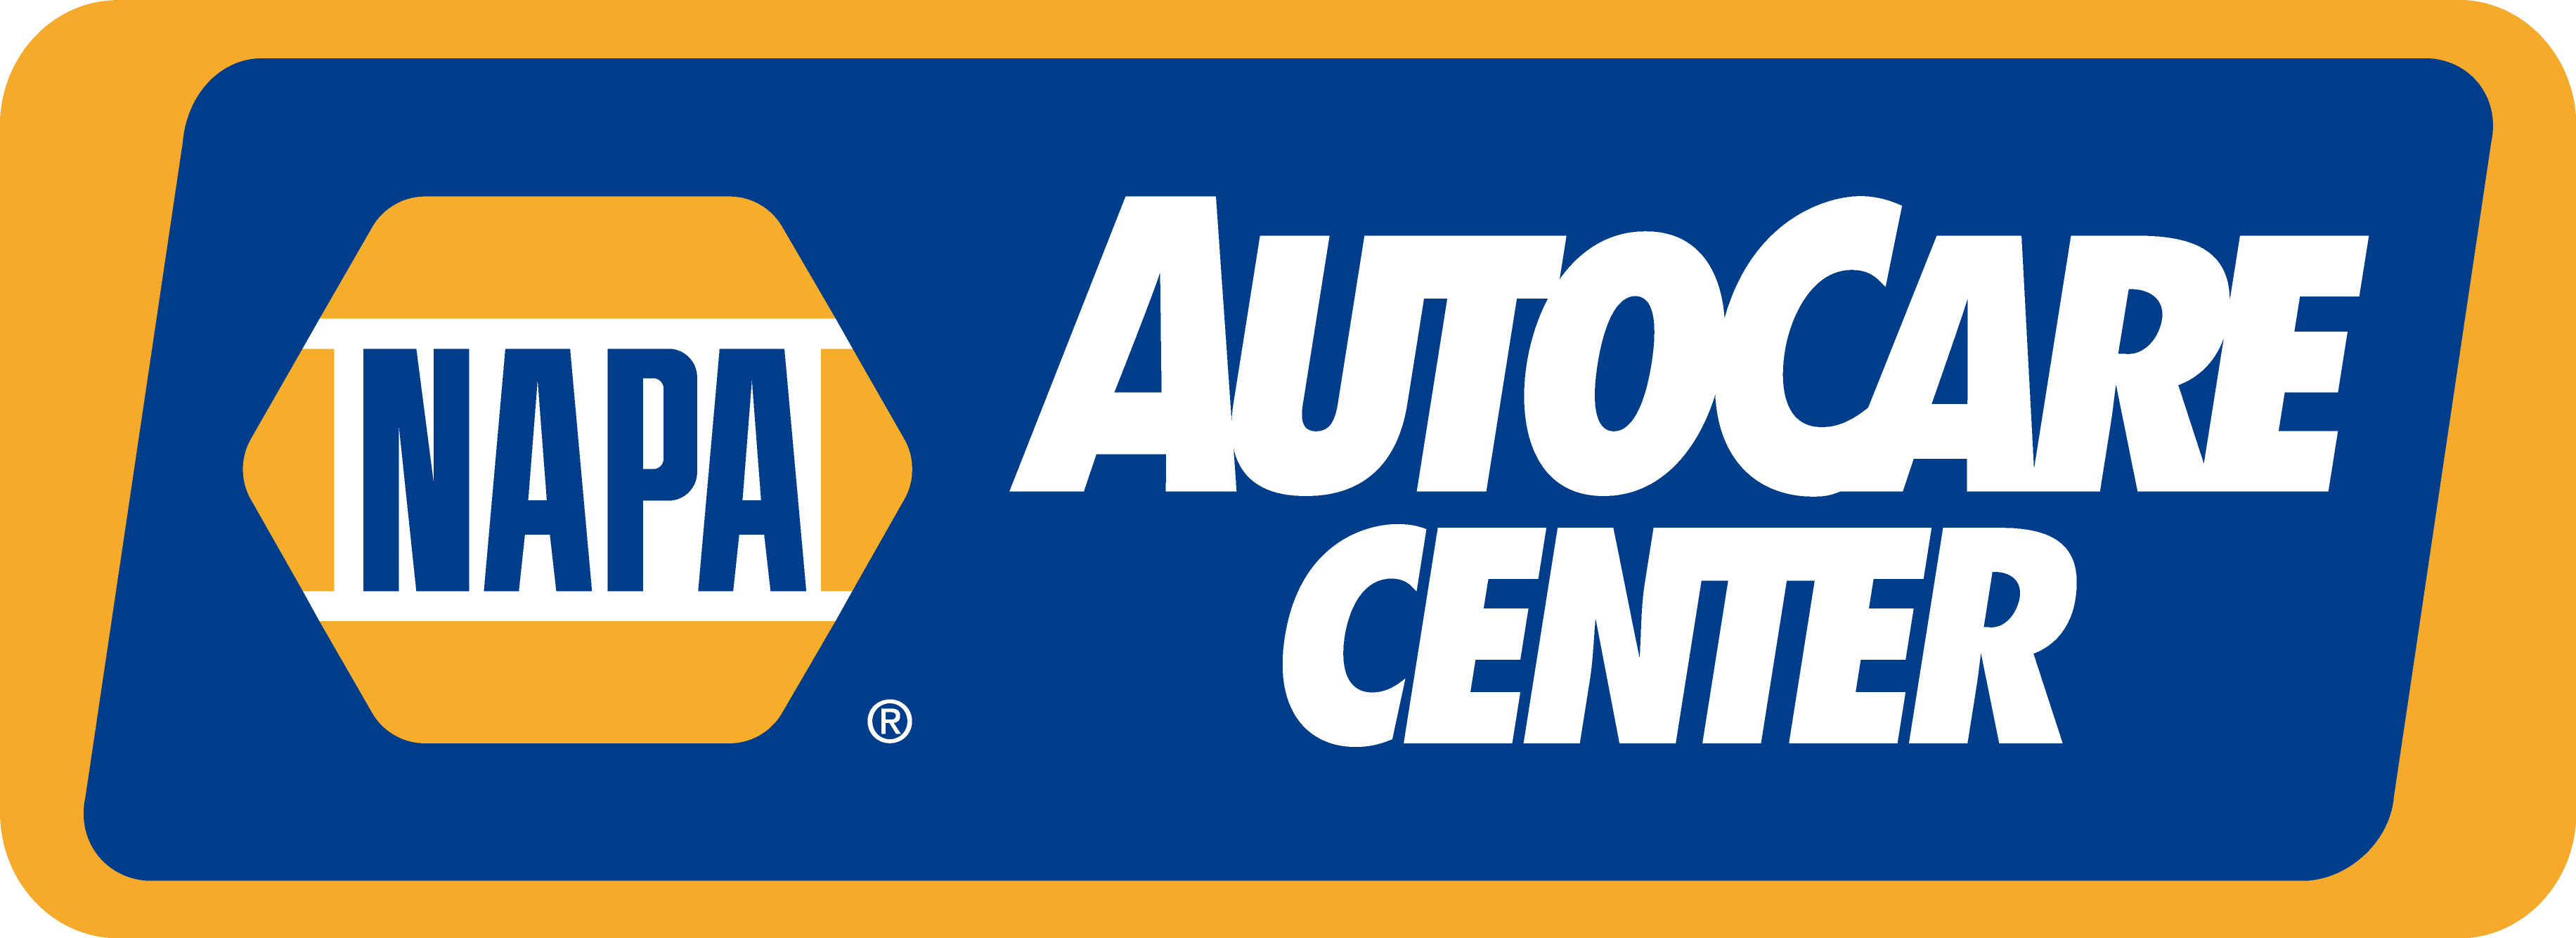 NAPA AutoCare Center - logo